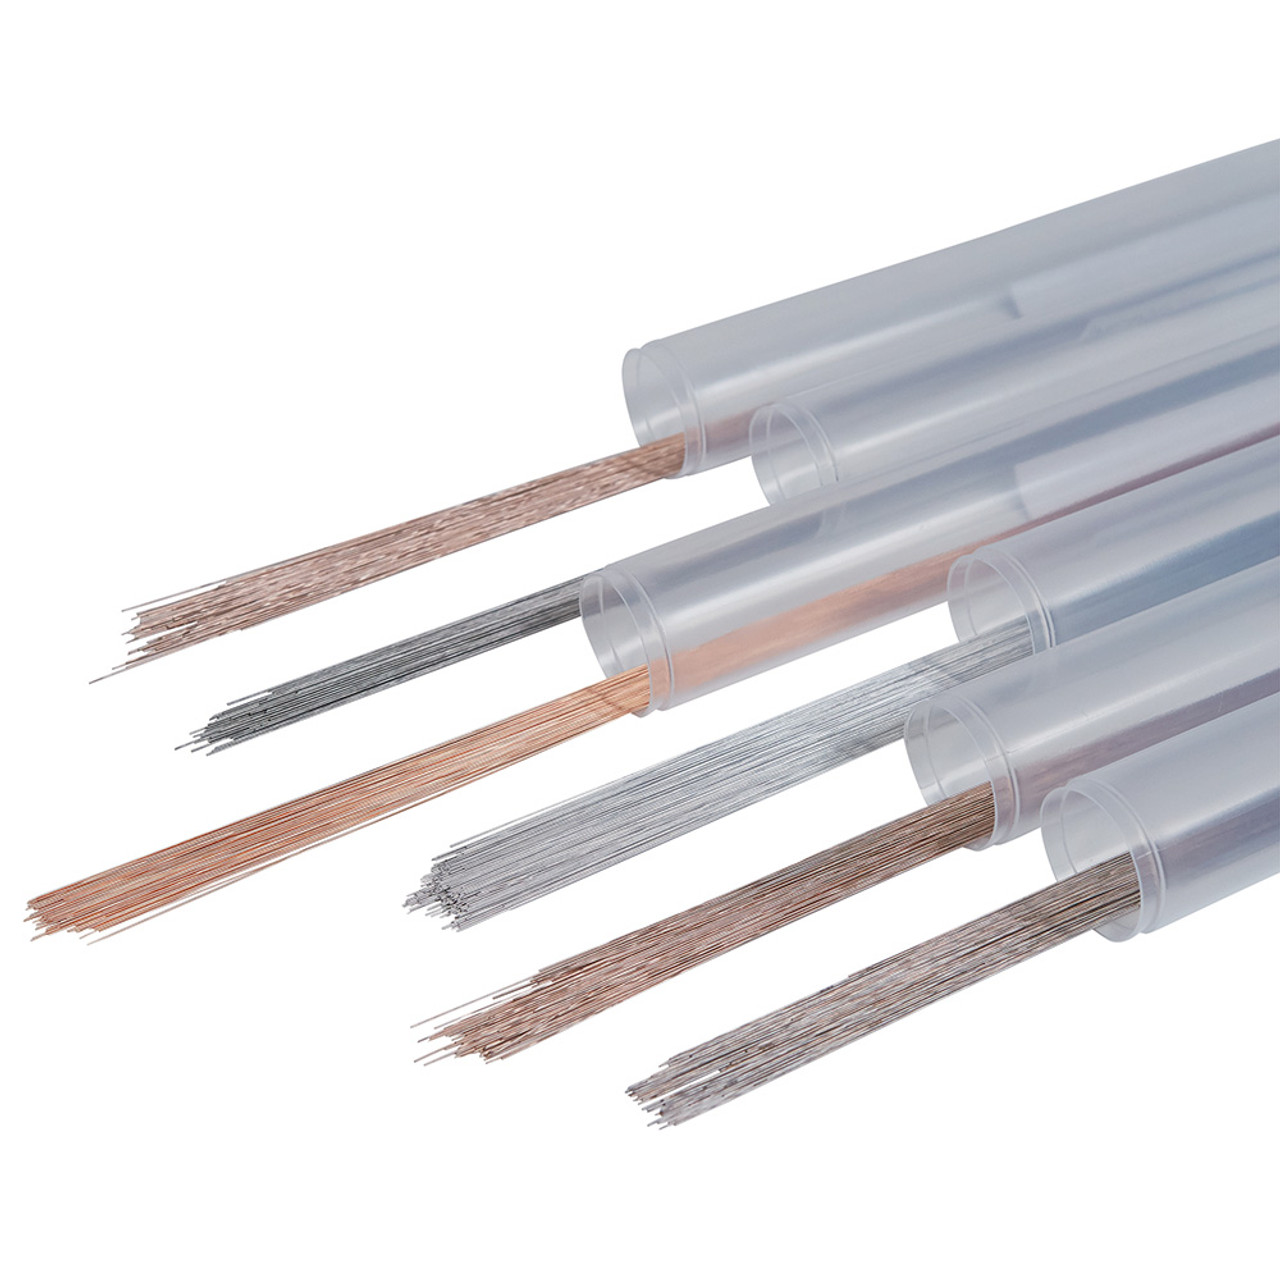 Laser Welding Wires - P-20, 0.3mm pkg. of 25 grams = approx. 141 wires